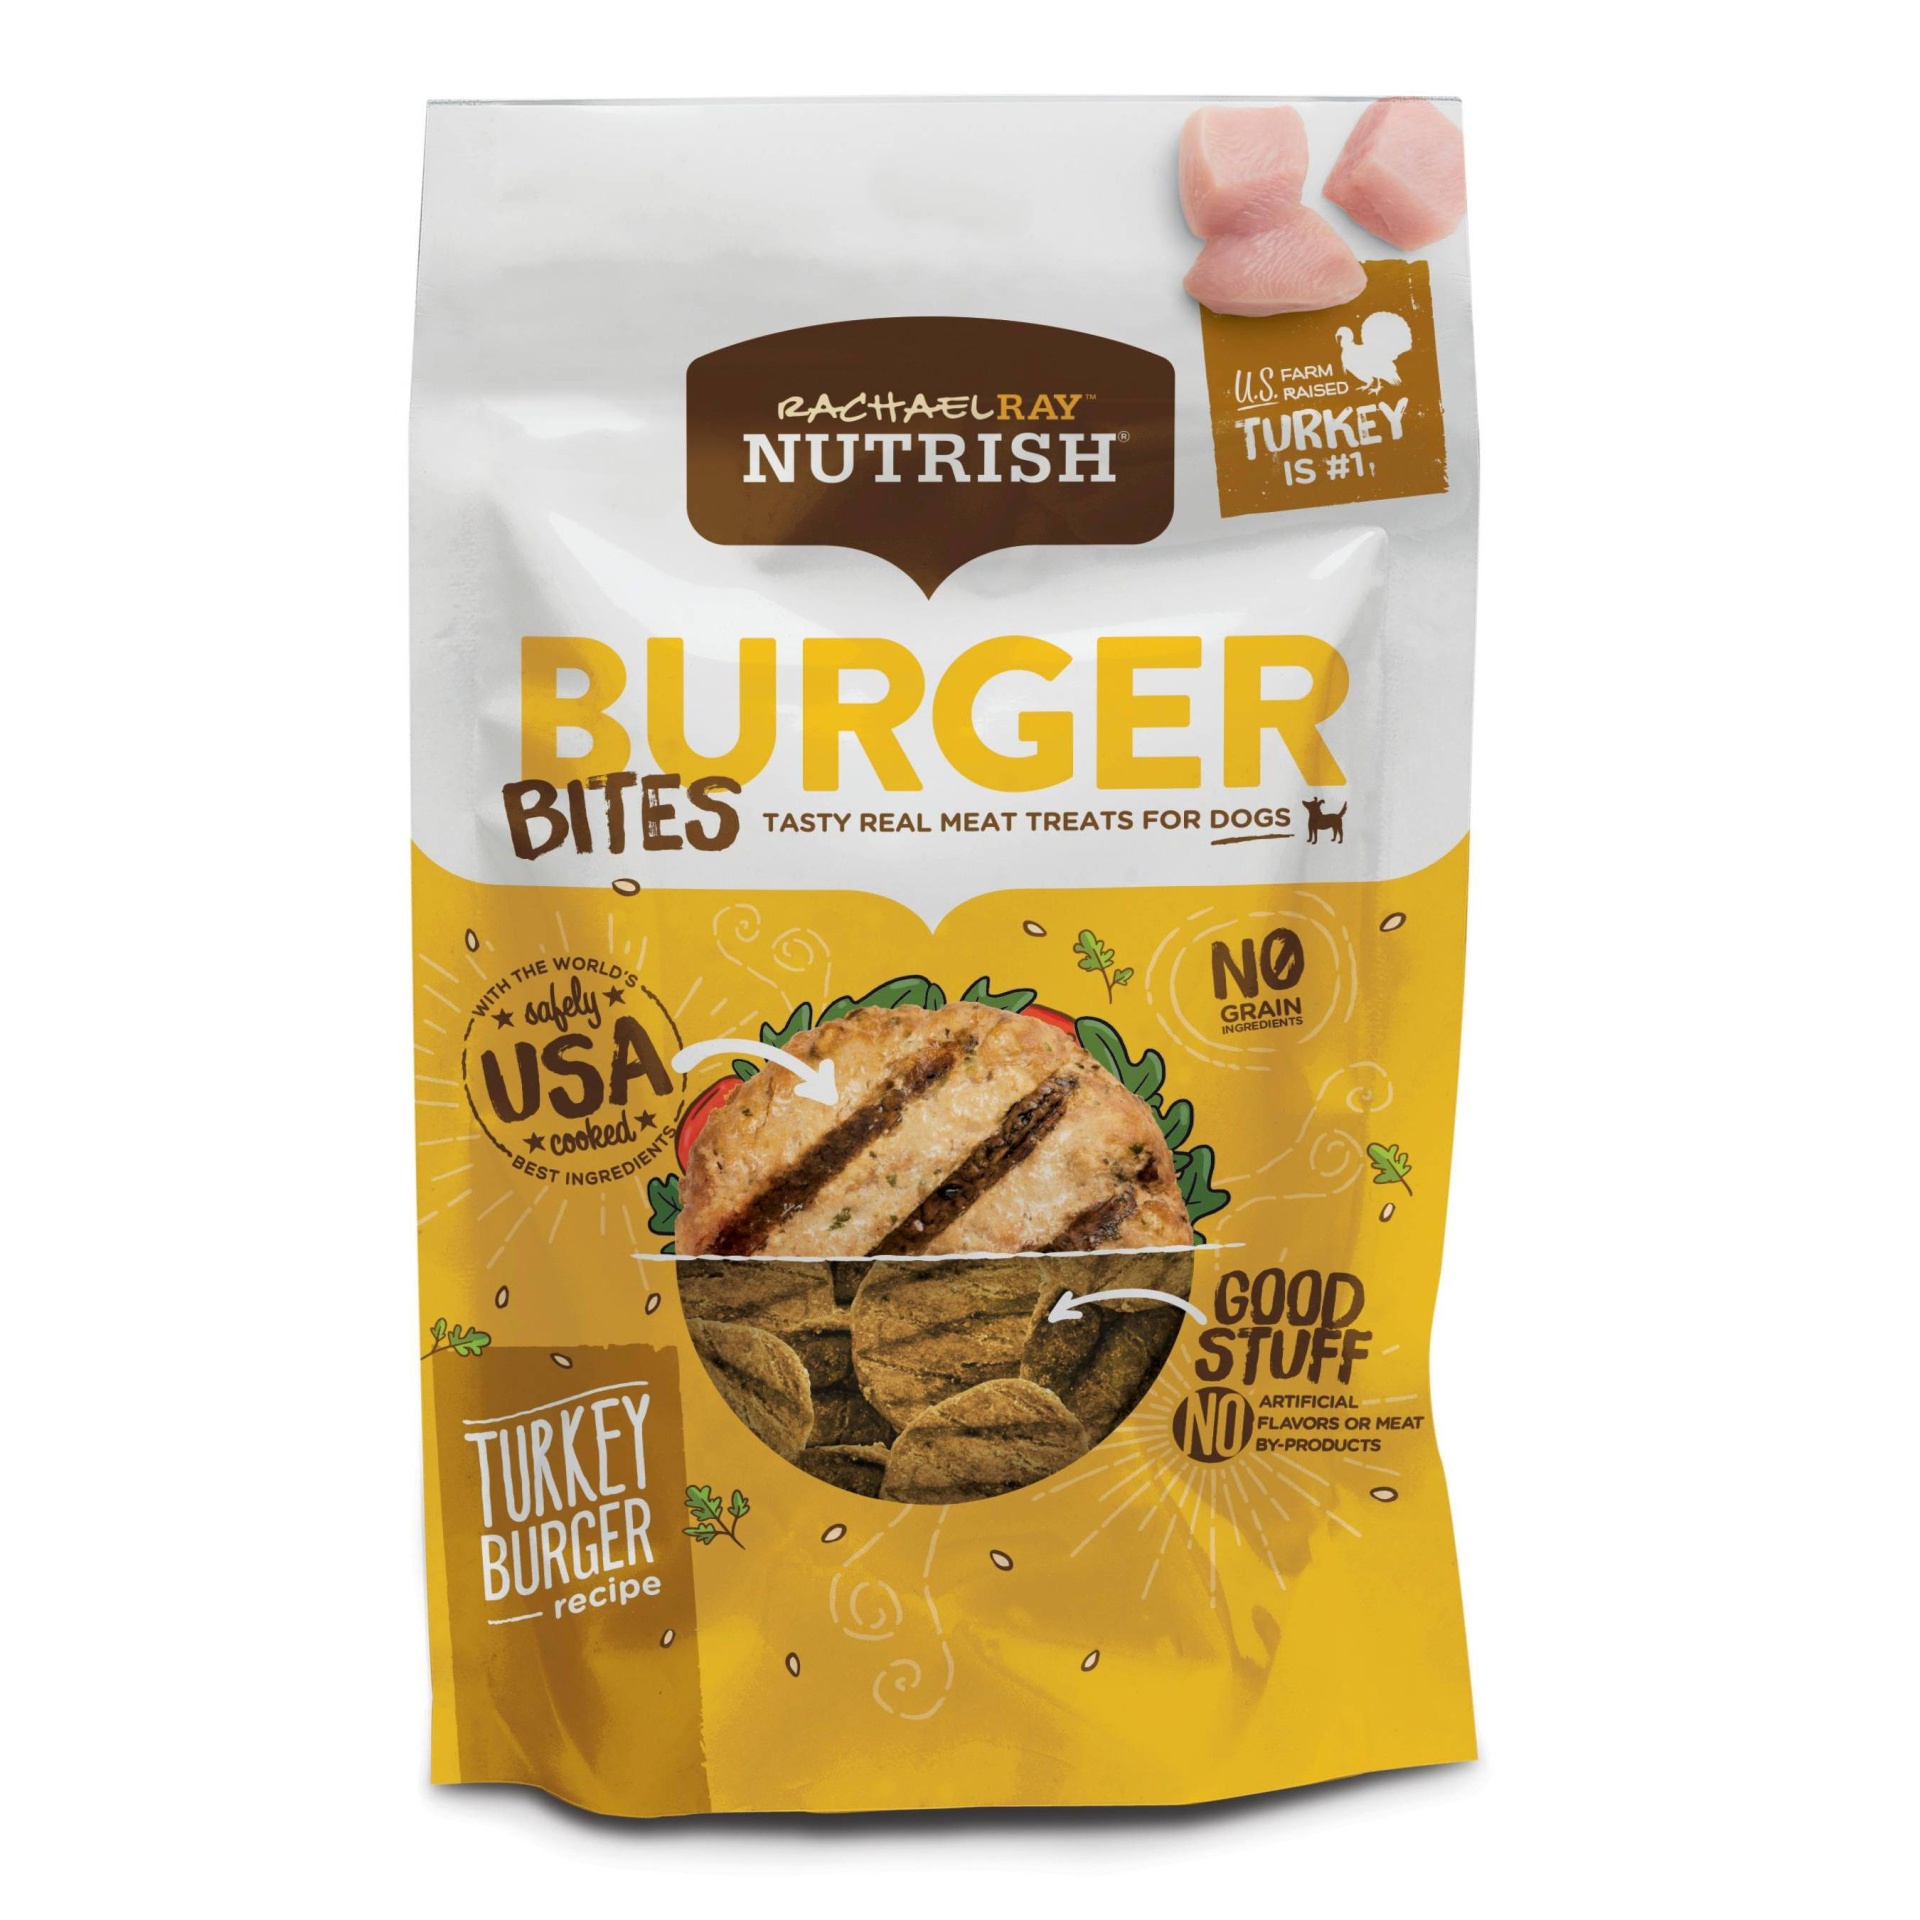 slide 1 of 1, Rachael Ray Nutrish Burger Bites Grain Free Turkey Burger Recipe Dog Treats, 12 oz